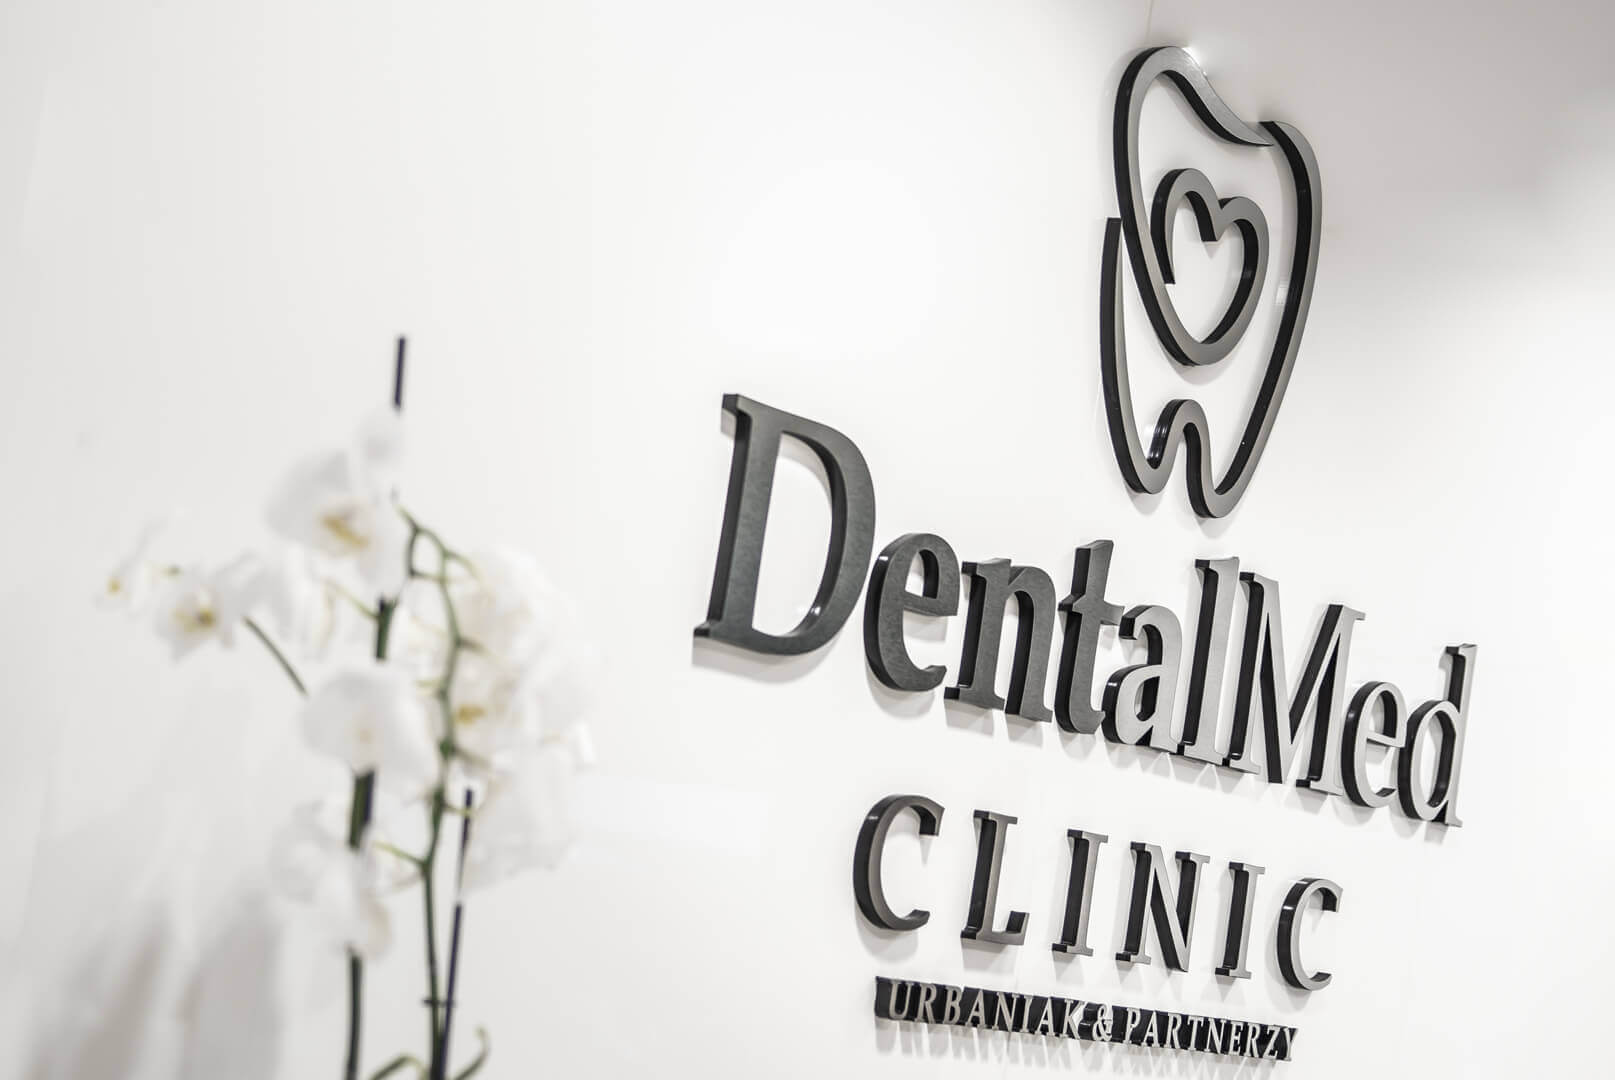 DentalMed - DentalMed - logo and 3D letters made of Plexiglass placed next to the reception desk